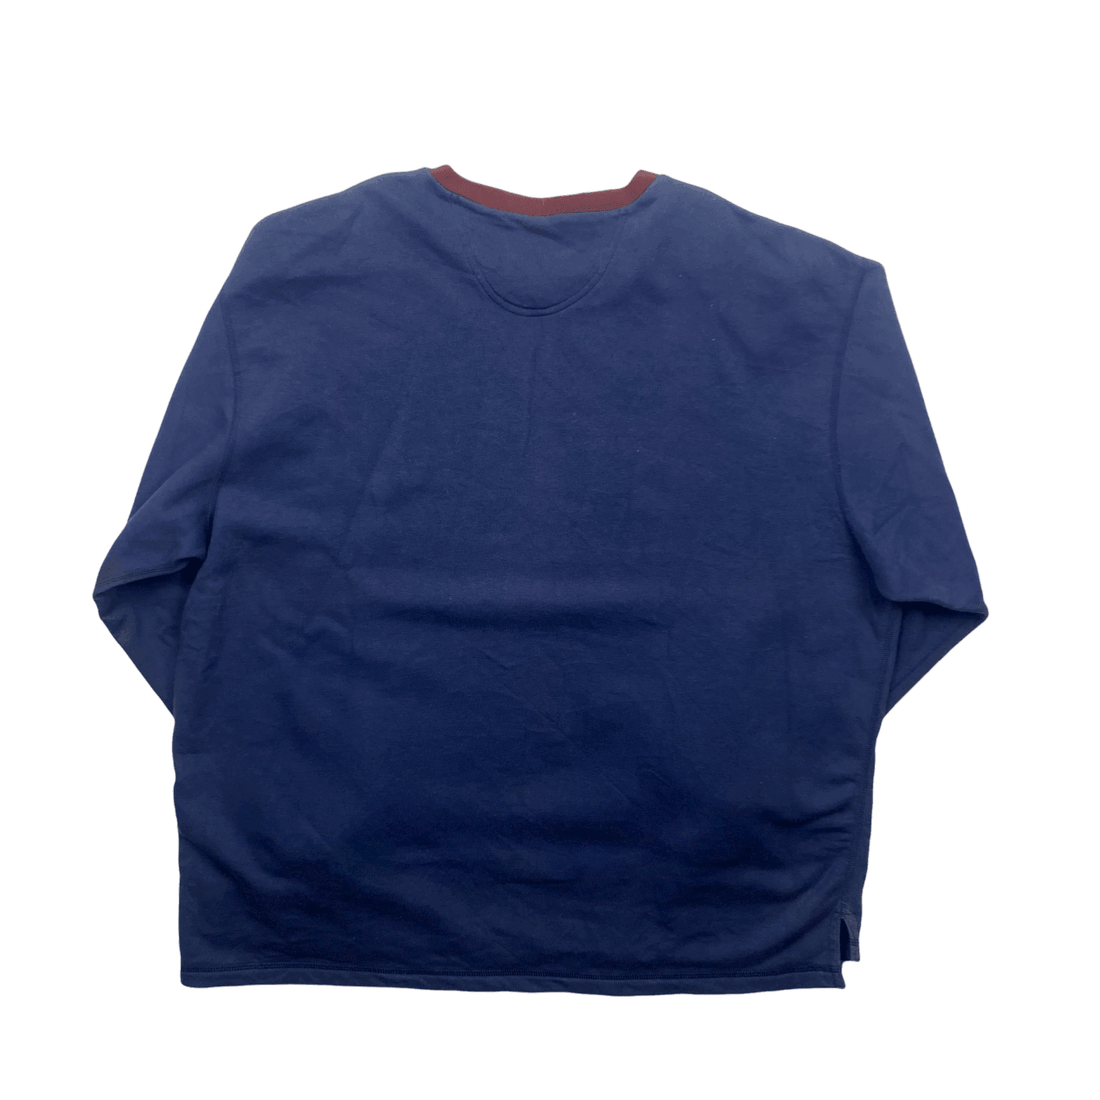 Vintage 90s Navy Blue + Red Nike Large Centre Swoosh Sweatshirt - Extra Large - The Streetwear Studio